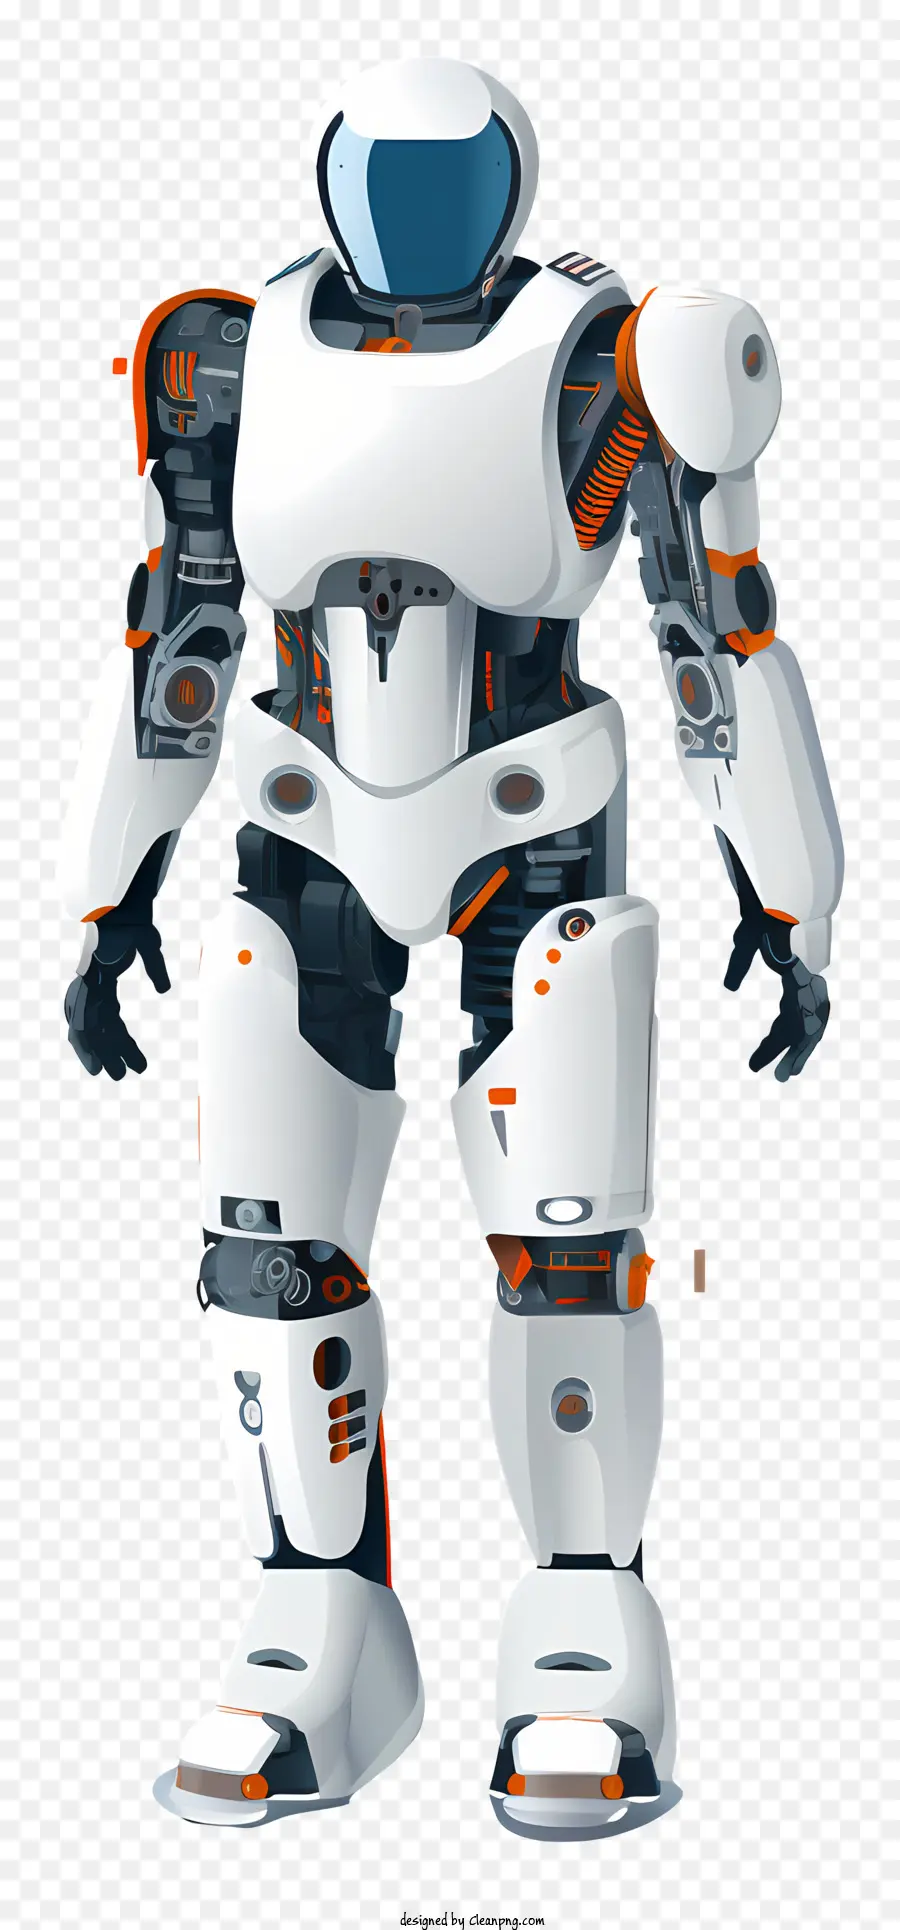 Robot umanoide White and Orange Robot Mechanical Mechanical Aspetto in argento e corpo arancione due occhi arancioni - Robot umanoide serio con aspetto meccanico e antenne